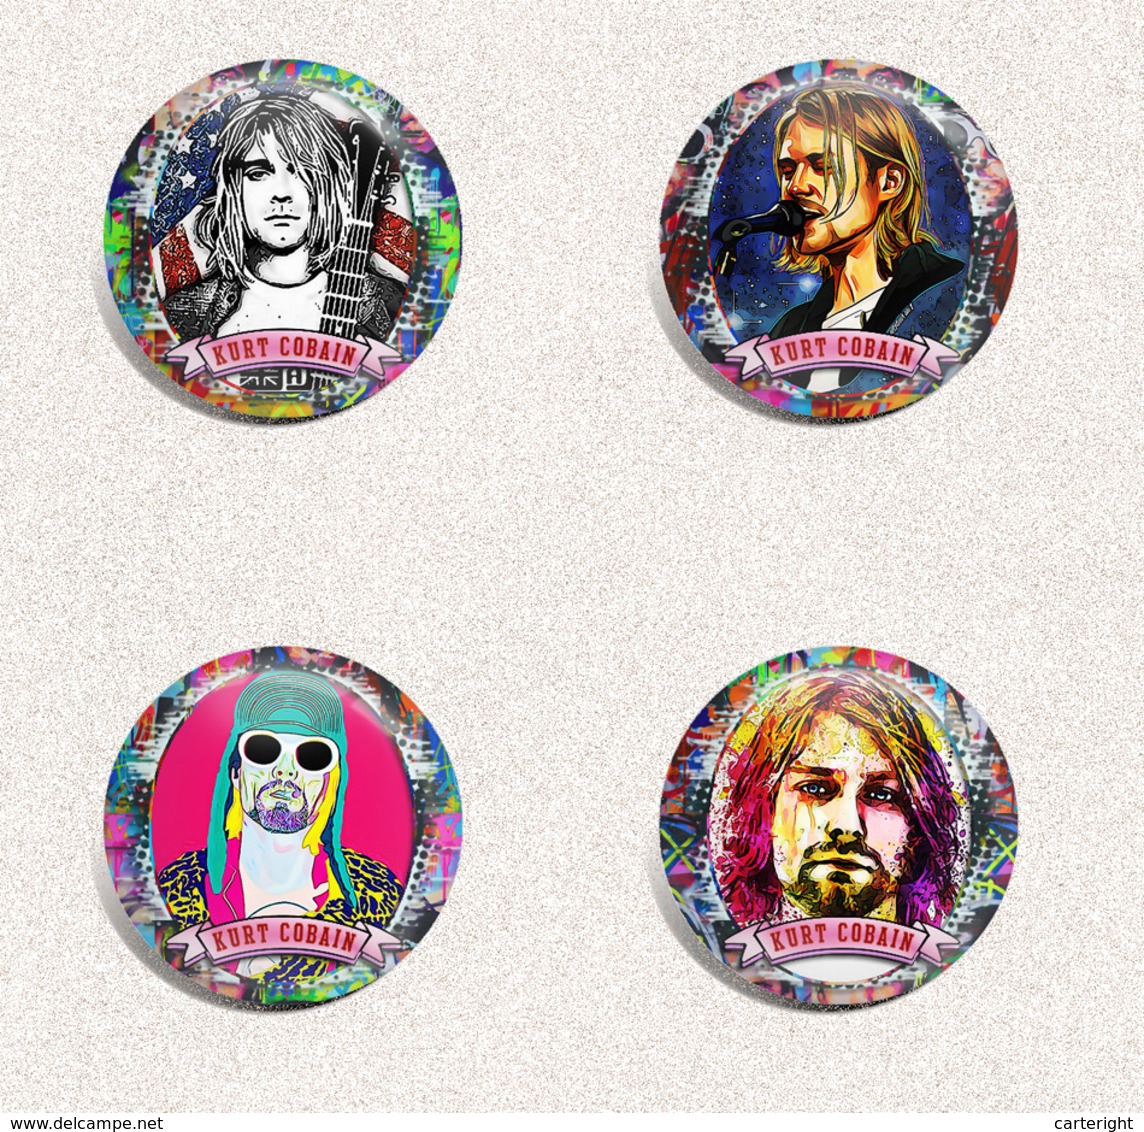 175 X Rock Kurt Cobain Music Fan ART BADGE BUTTON PIN SET (1inch/25mm Diameter) - Music